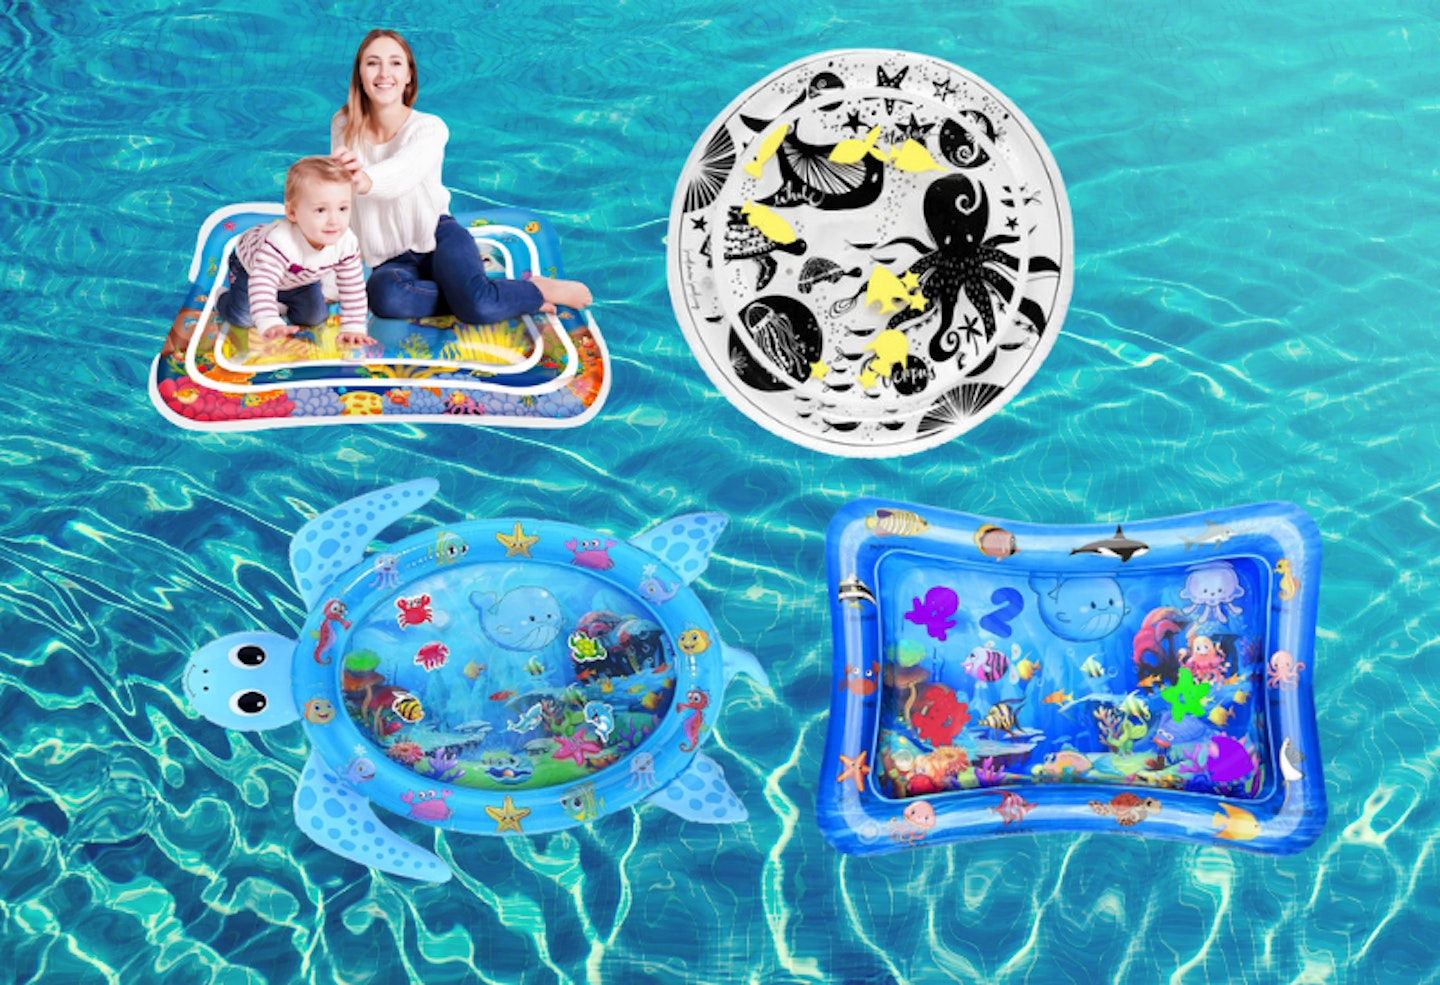 Floating Water mat, water play mats